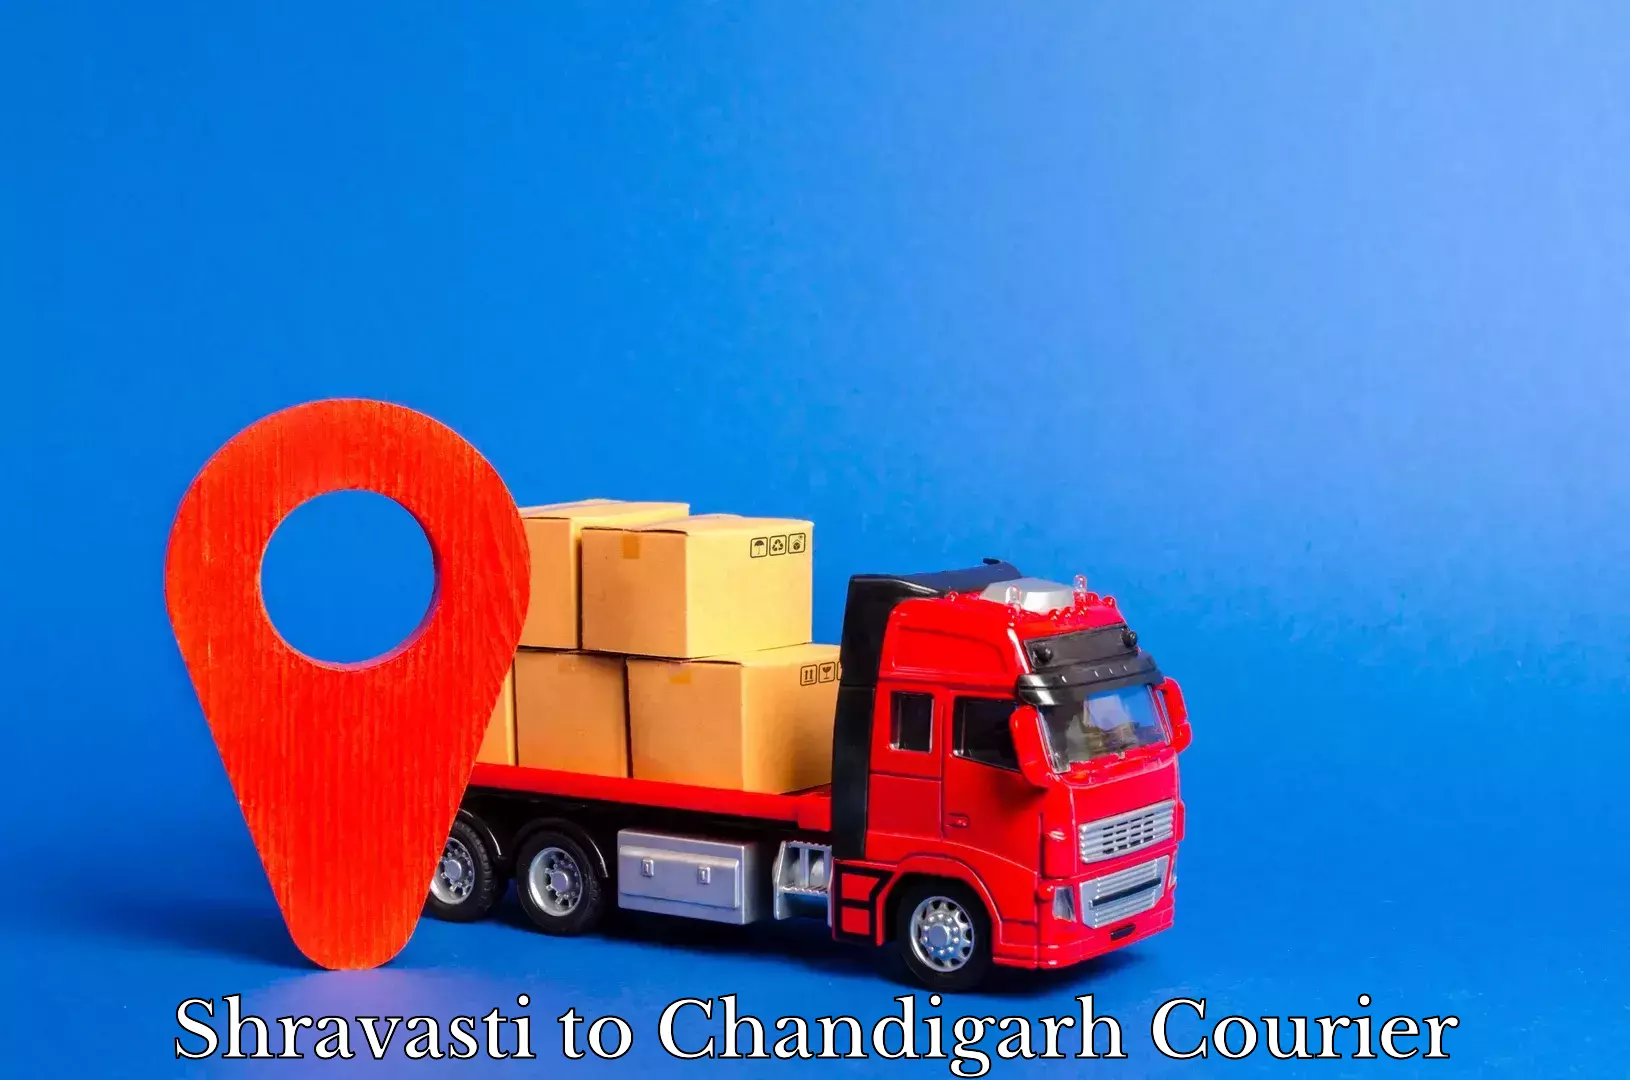 Express logistics service Shravasti to Chandigarh